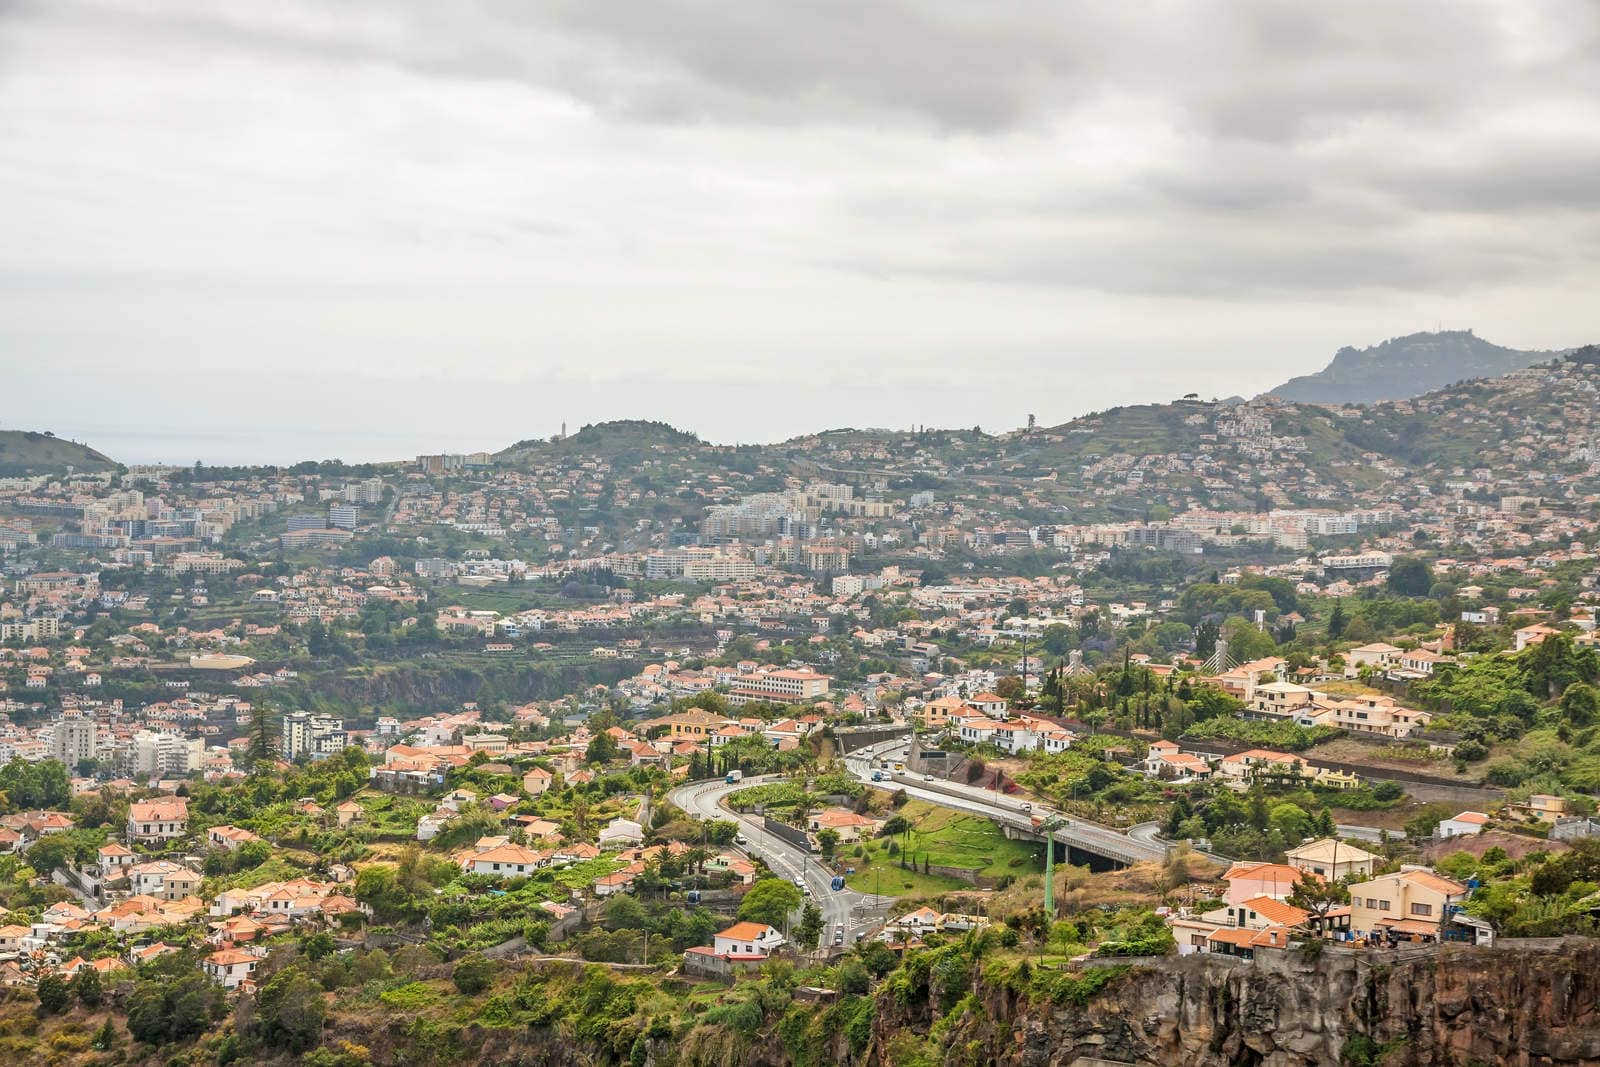 View over Funchal, Madeira, Portugal from botanical garden Jardim Botanico